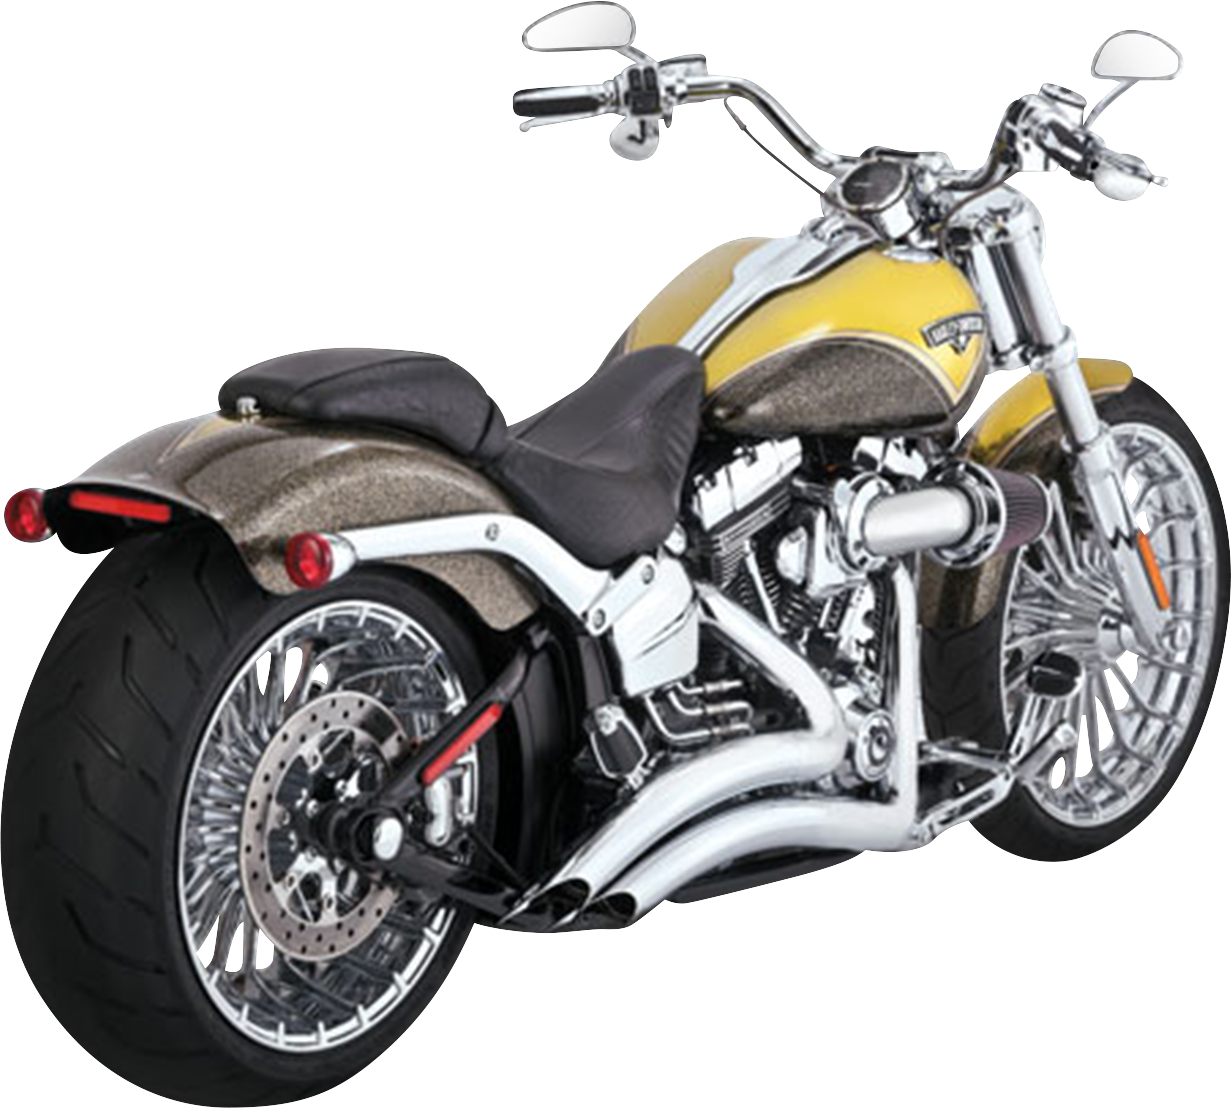 Vance & Hines Big Radius PCX Exhaust System 2013-2017 Harley Softail Breakout